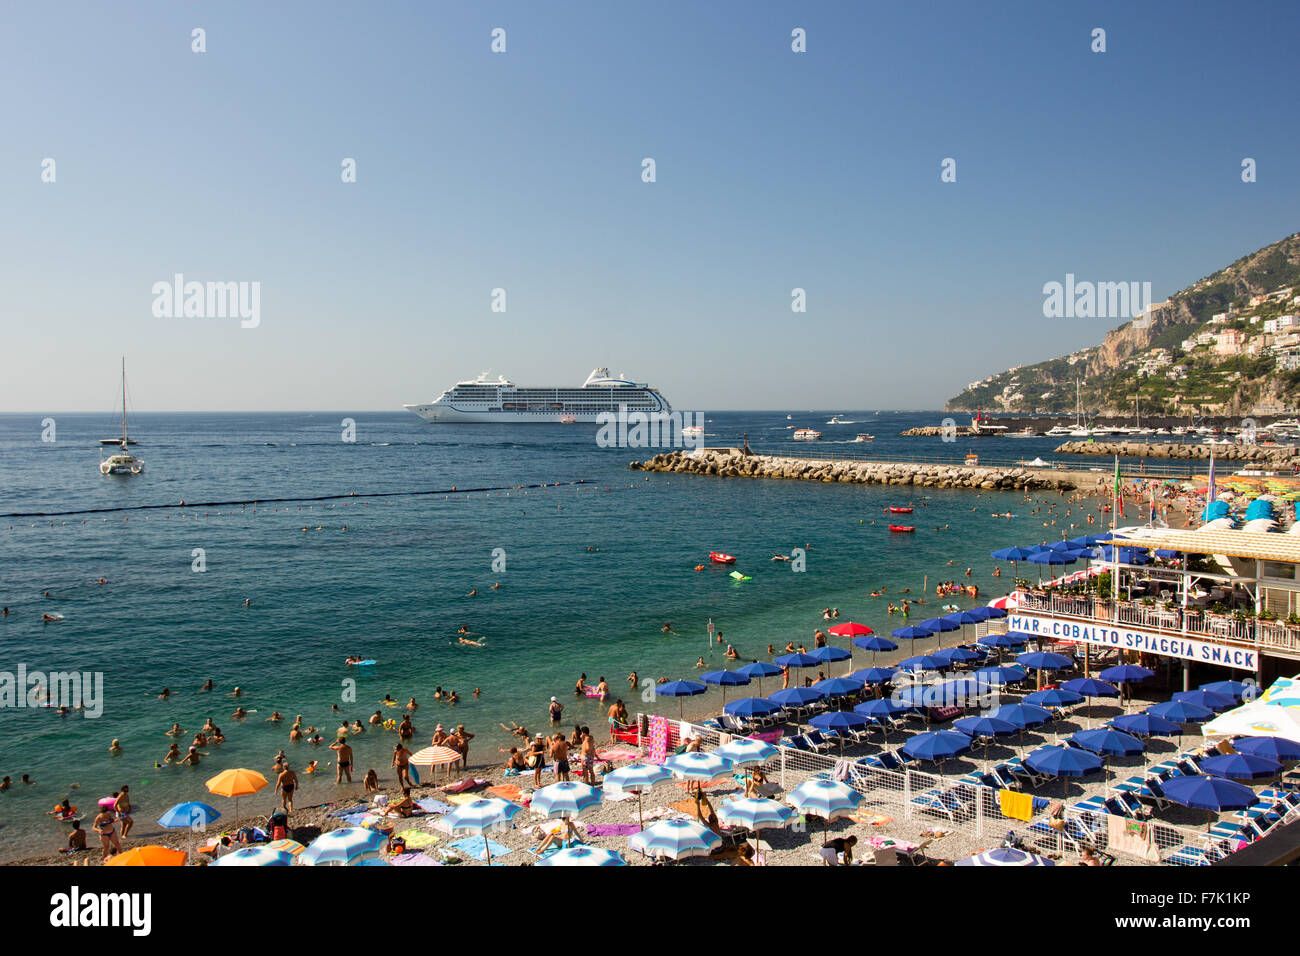 Amalfi busy beach Stock Photo